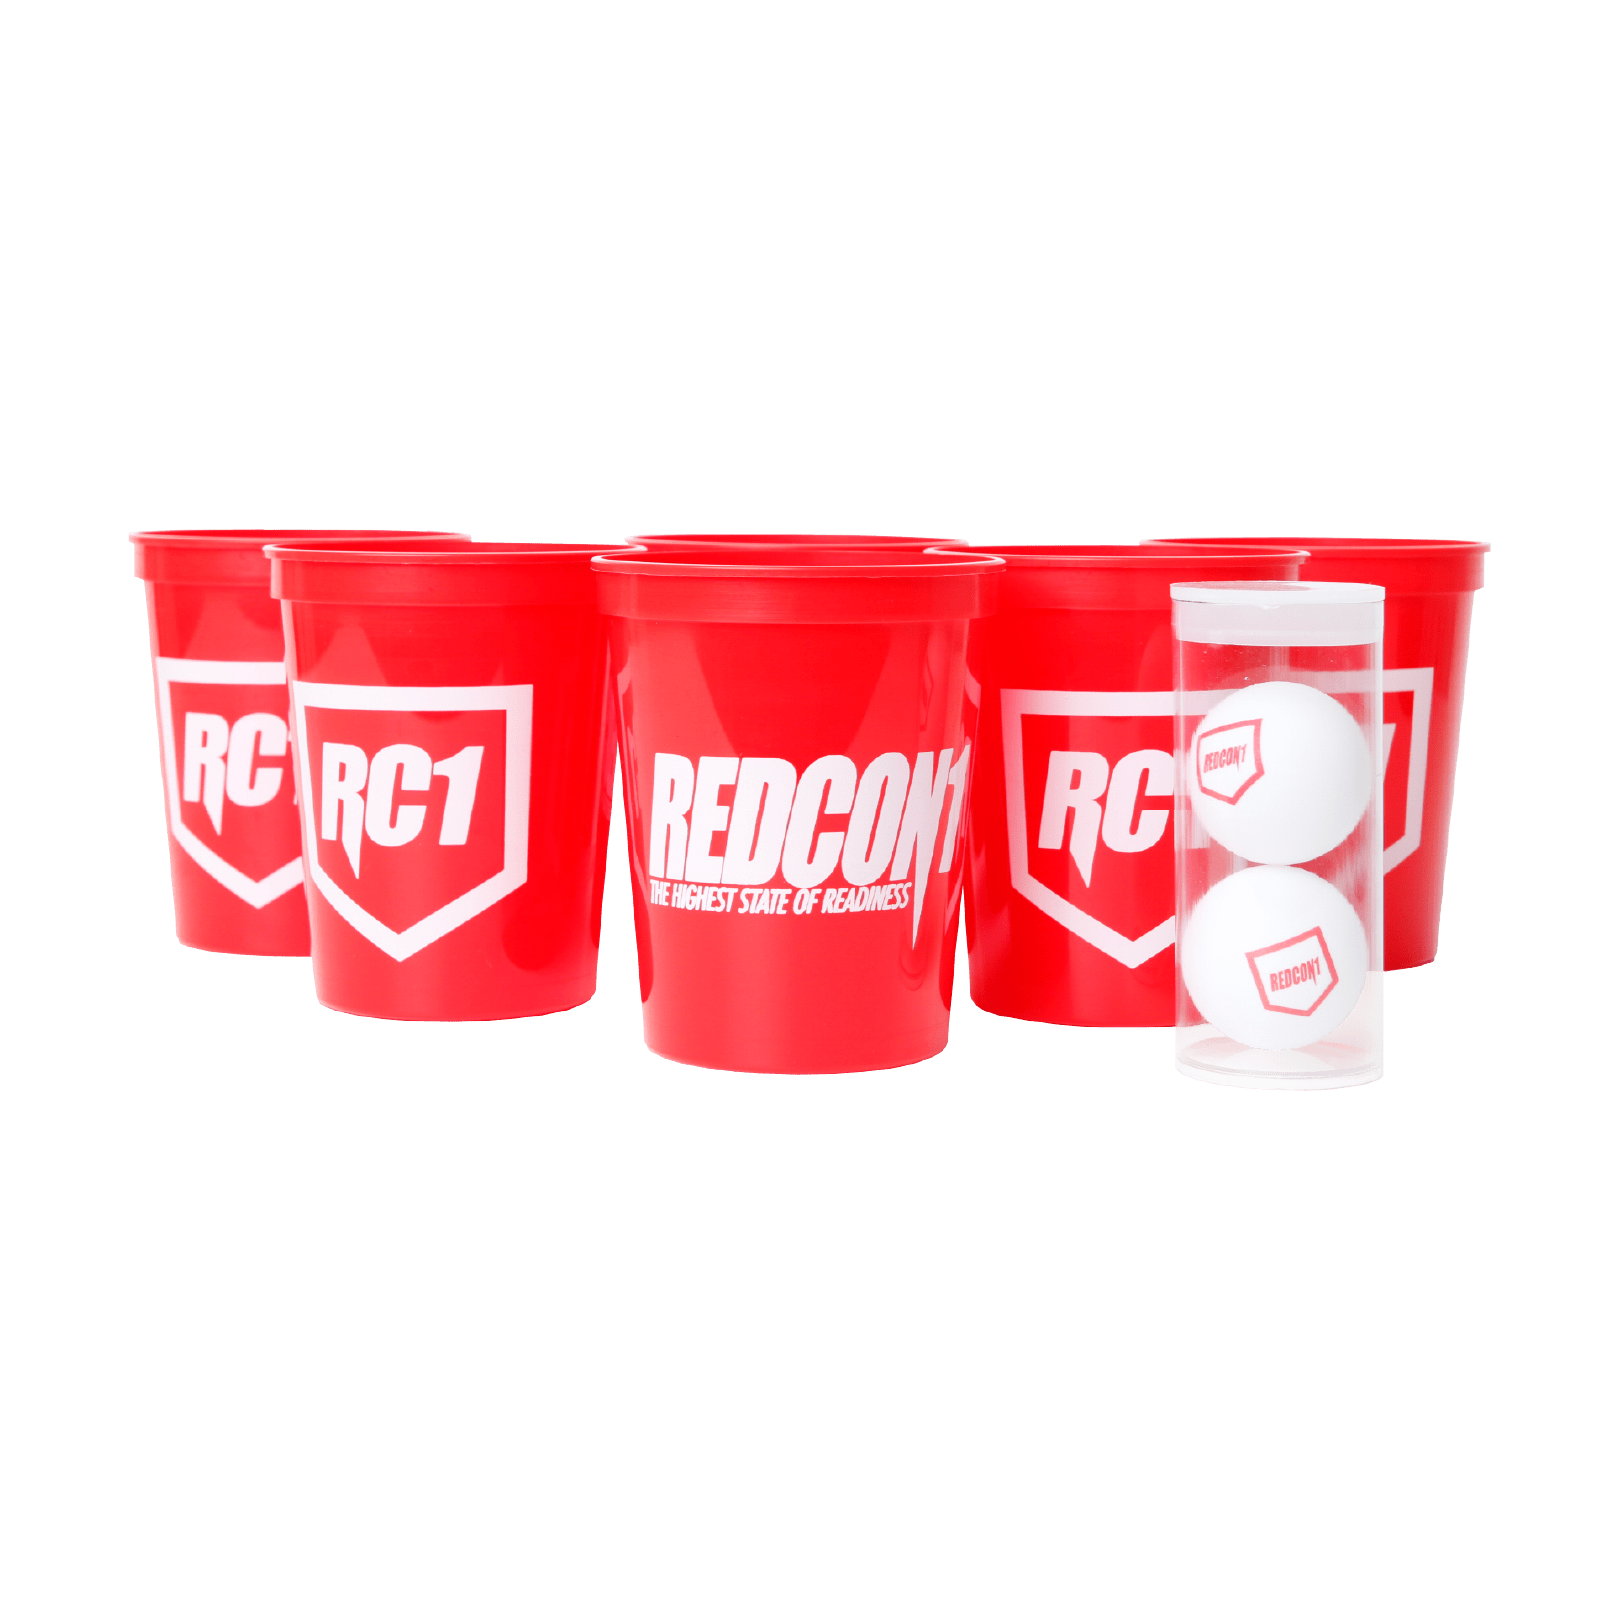 Redcon1 Beer Pong Set